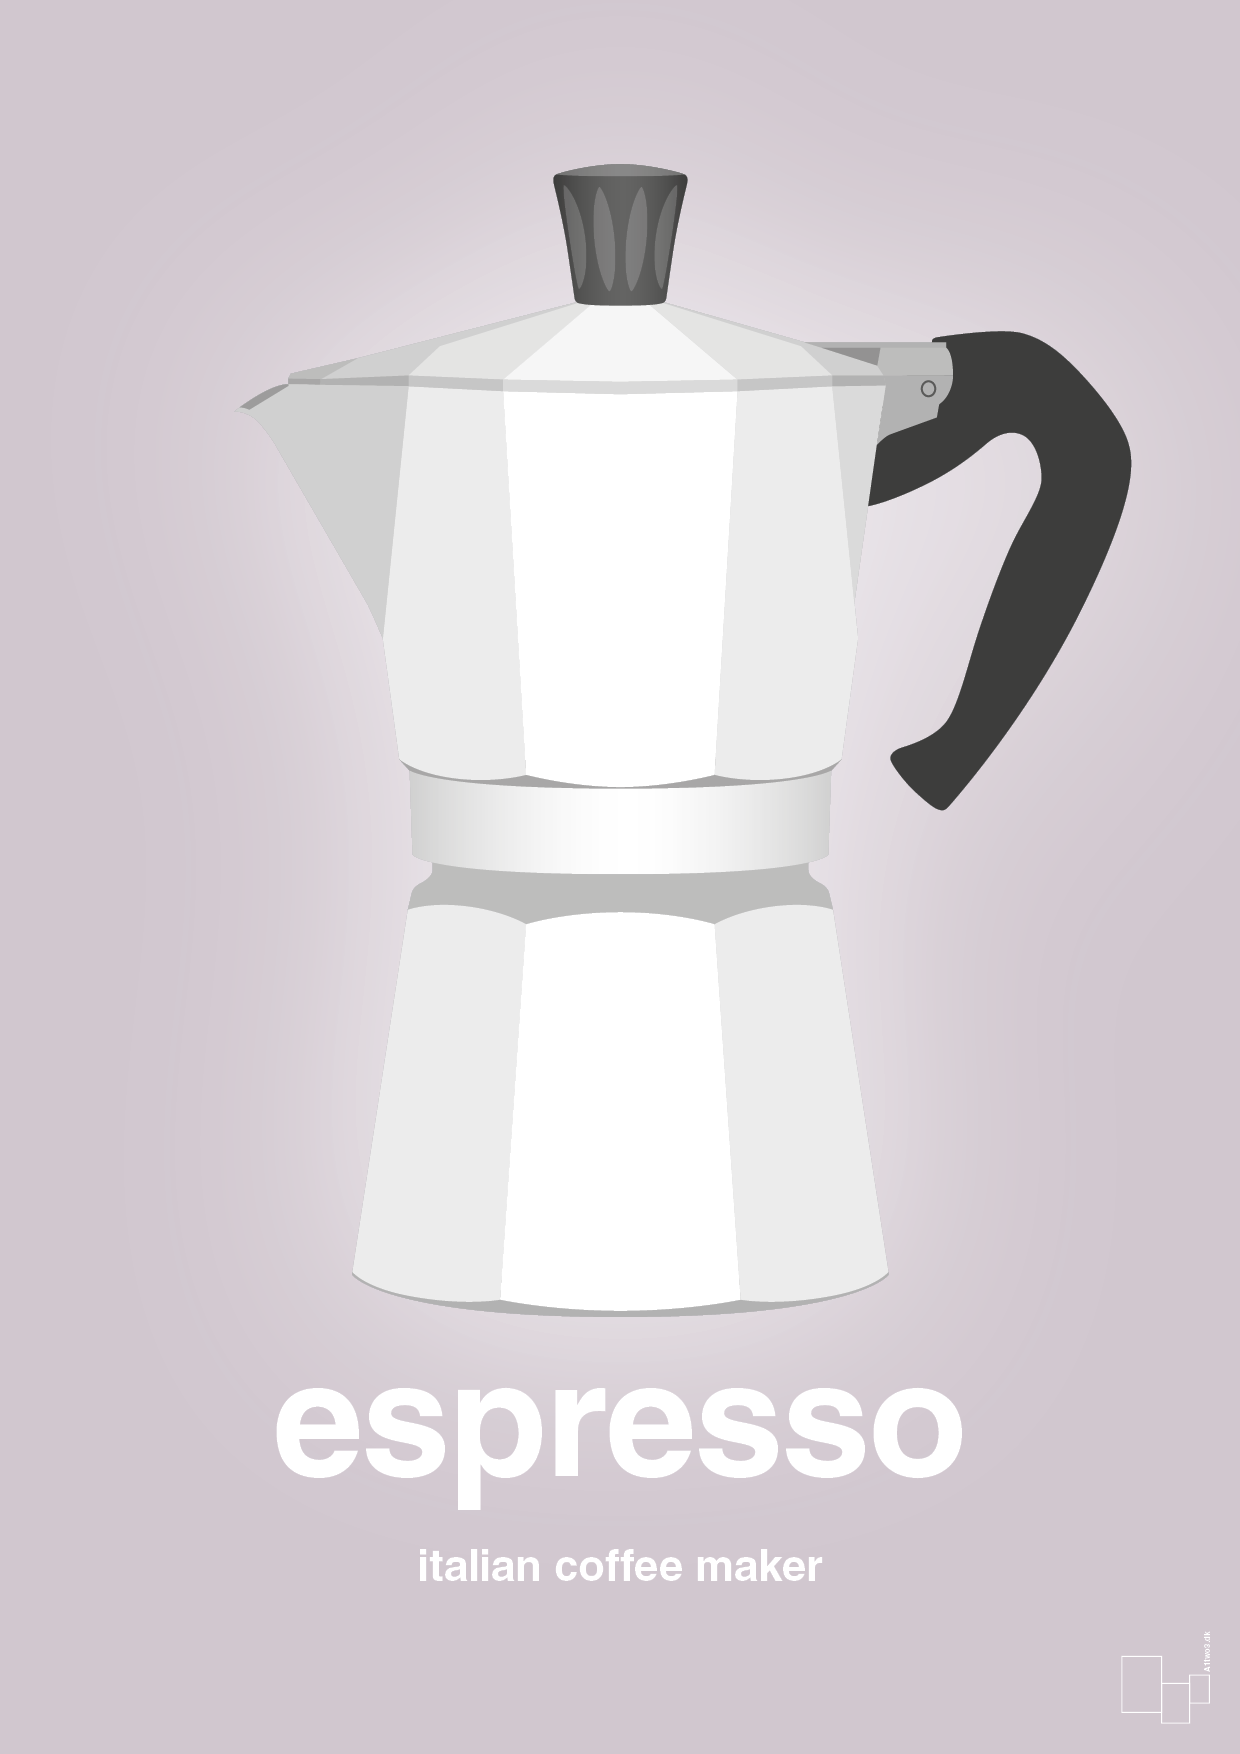 espresso - italian coffee maker - Plakat med Mad & Drikke i Dusty Lilac